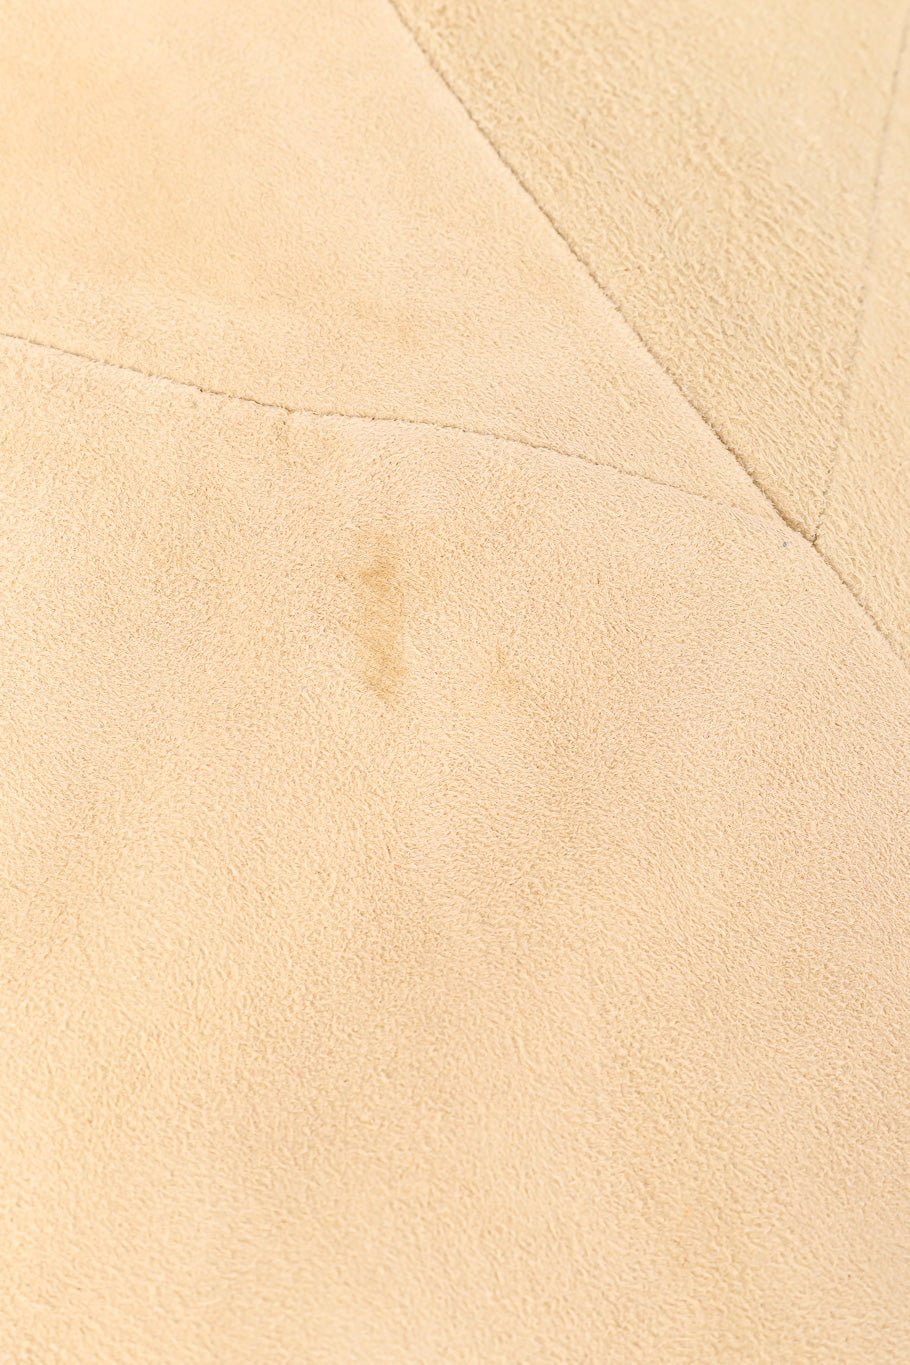 Vintage Char suede fringe jacket small discoloration closeup @Recessla